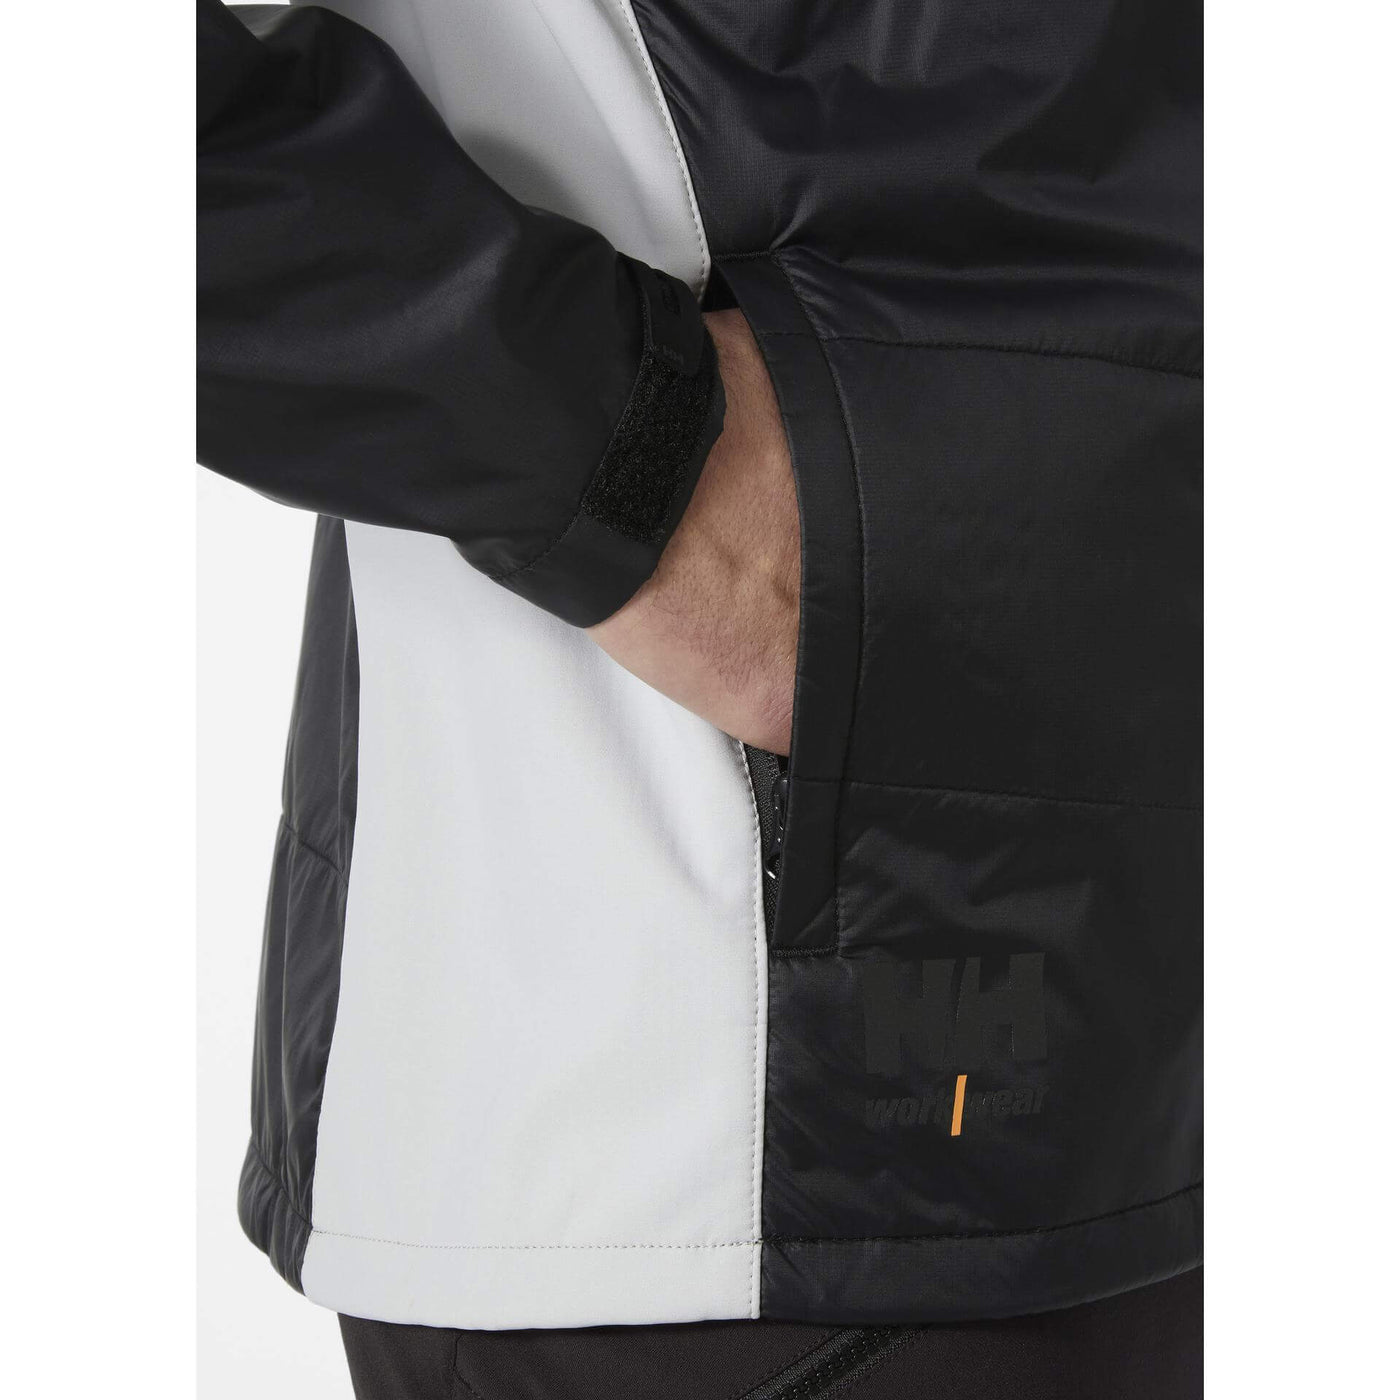 Helly Hansen Kensington Insulated Jacket Black/Grey Feature 1#colour_black-grey